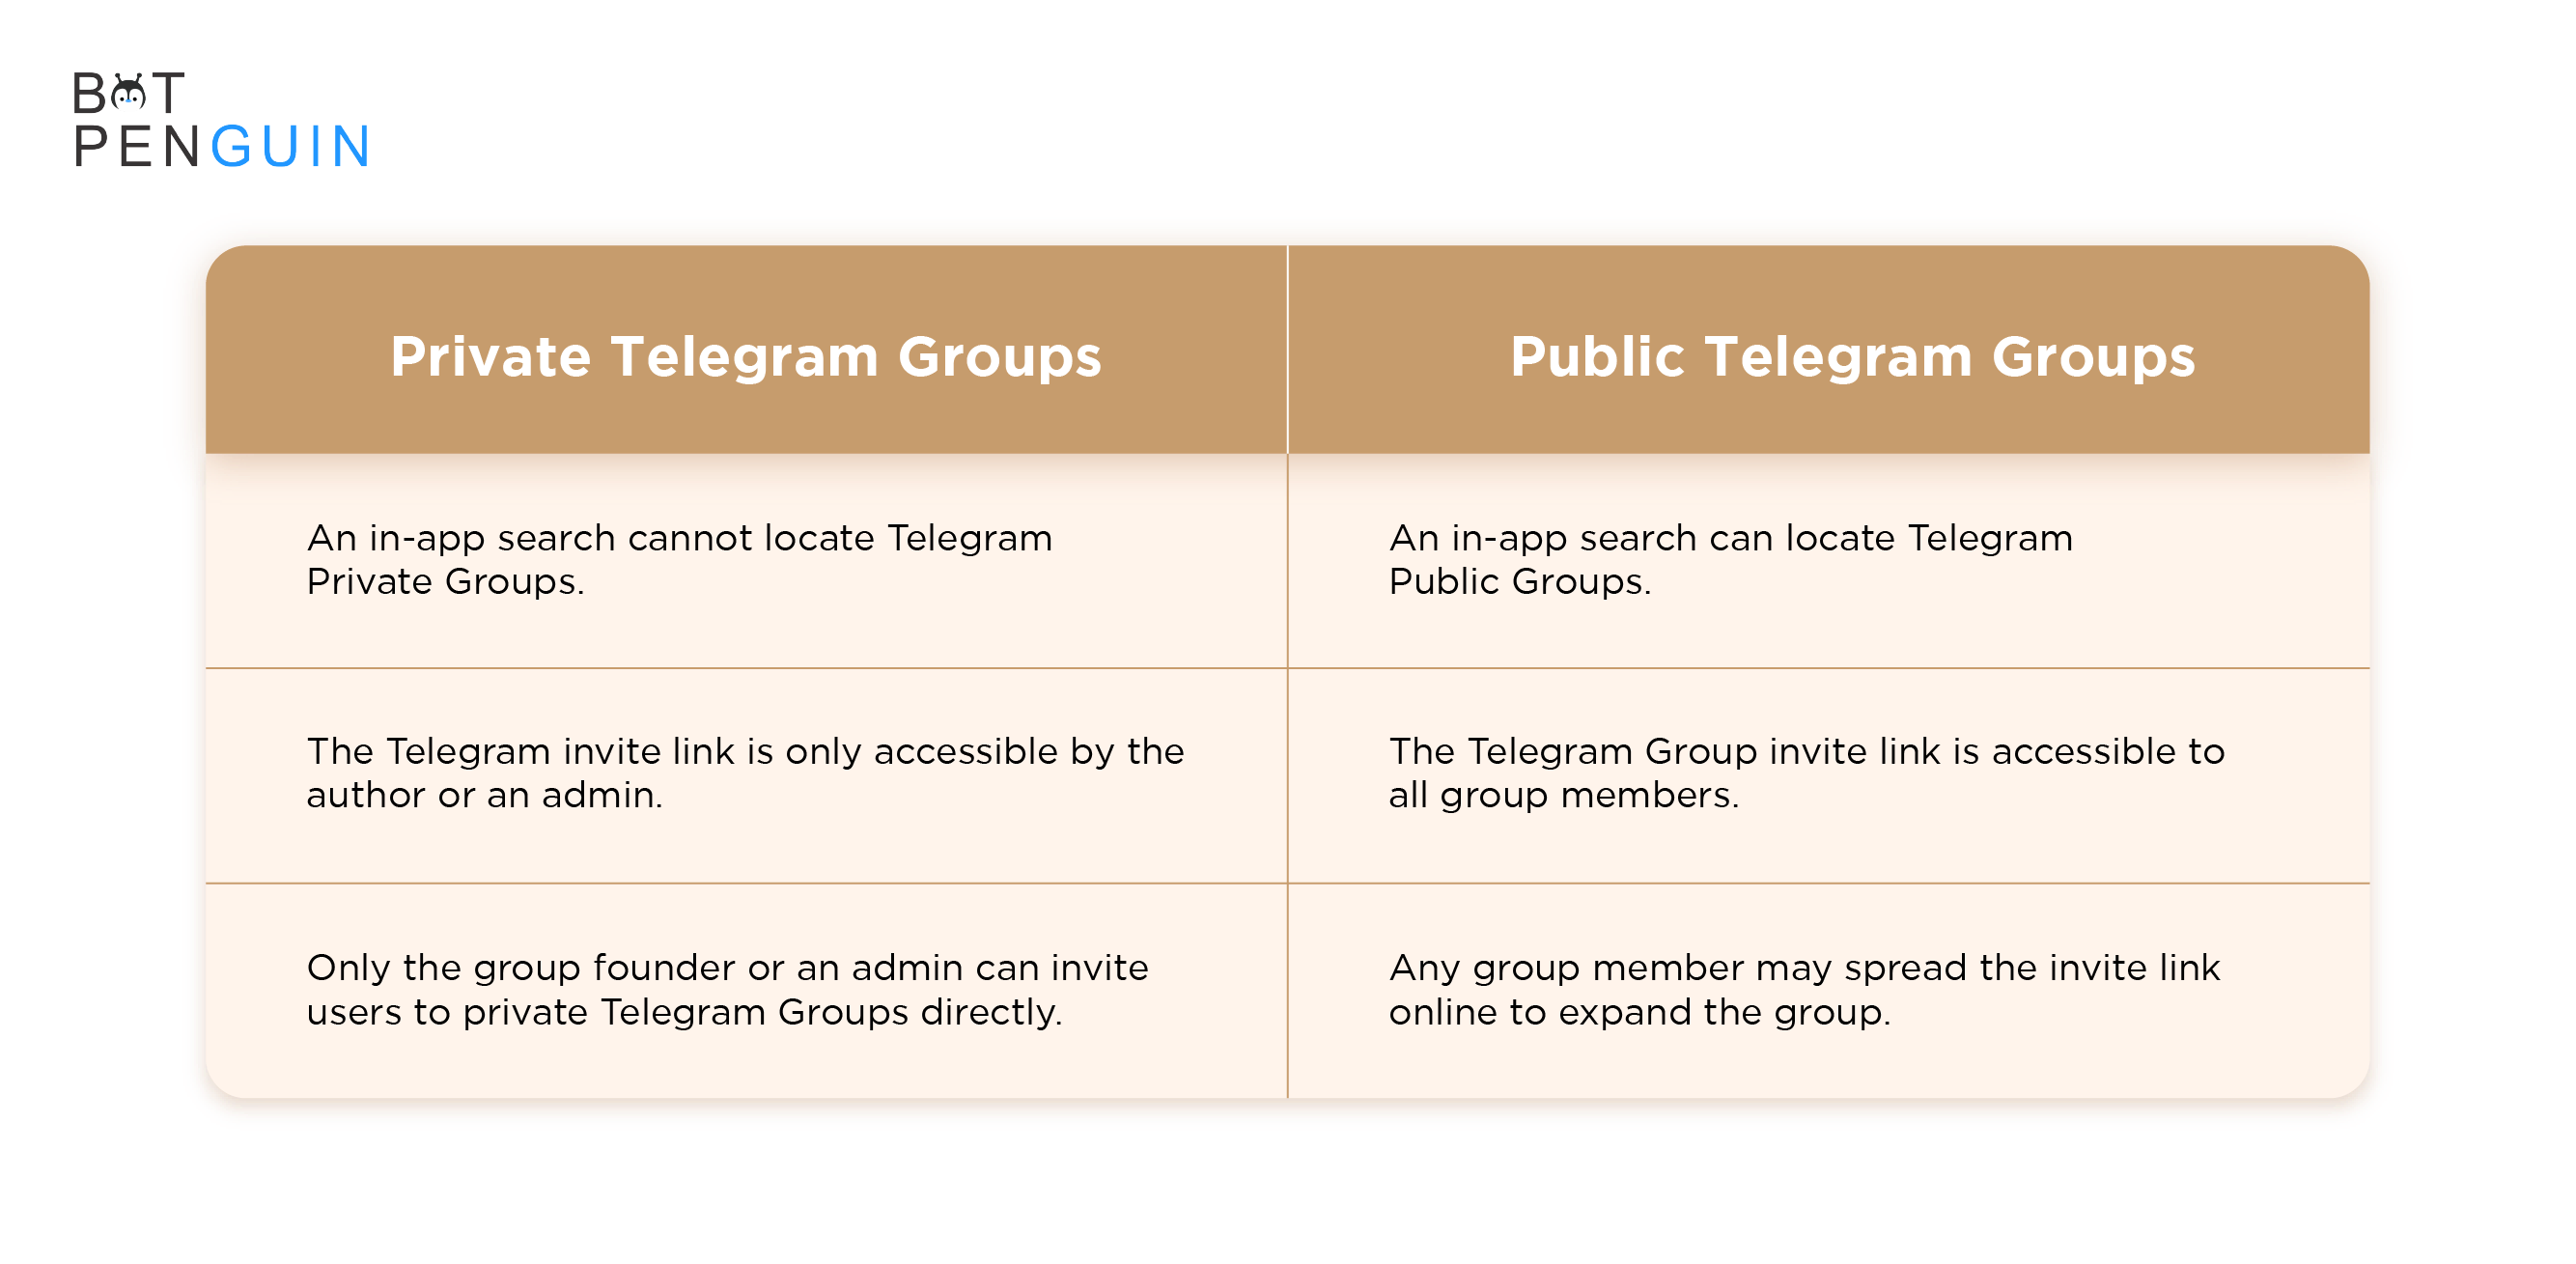 Difference between Private Telegram Groups vs. Public Telegram Groups